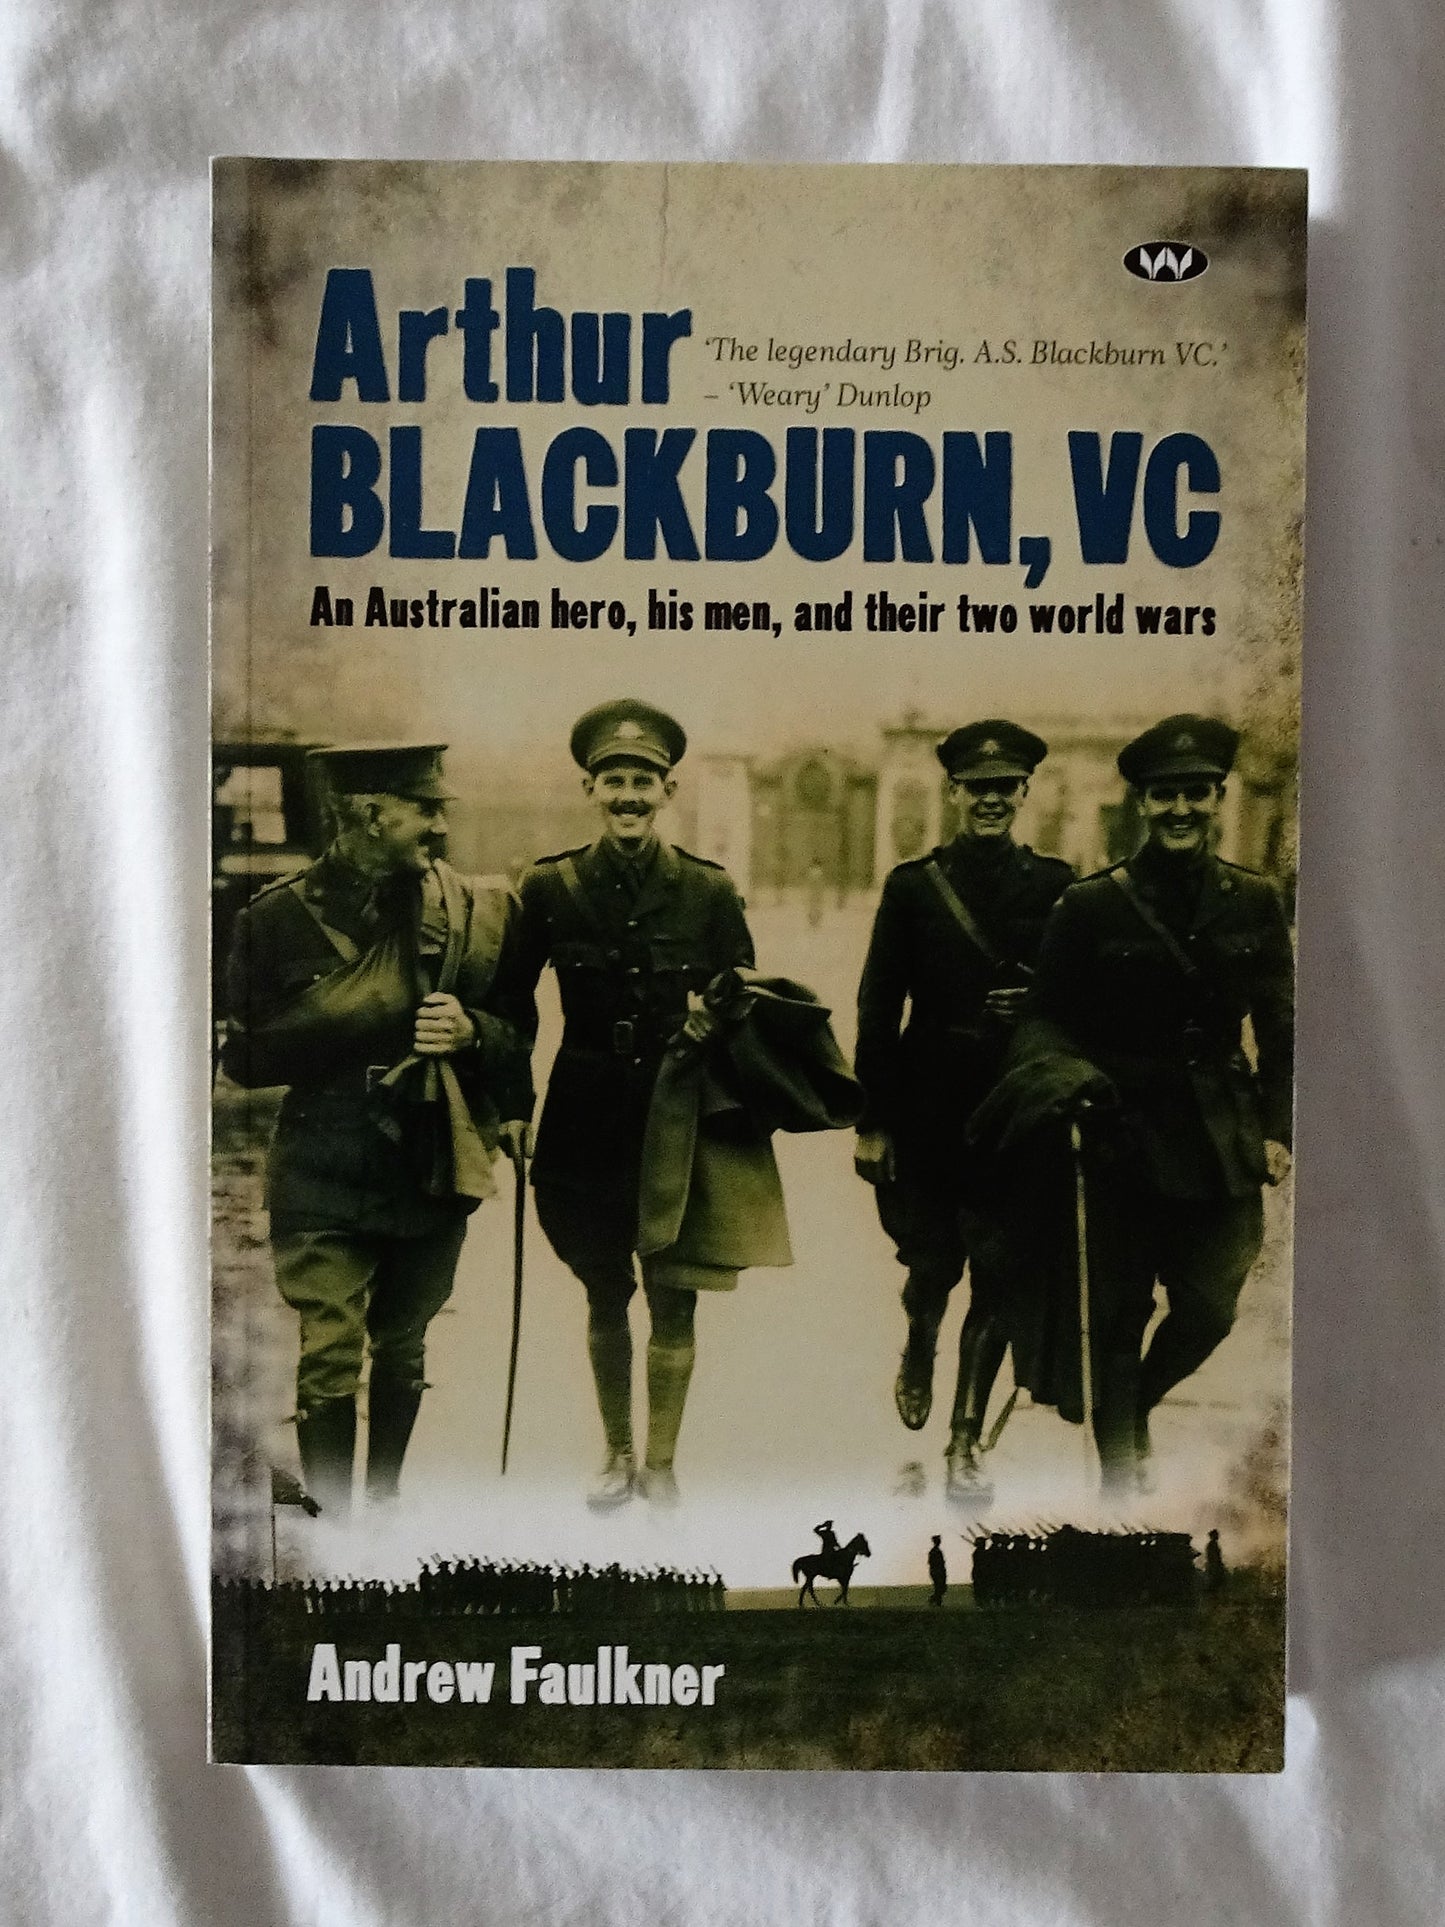 Arthur Blackburn, VC  An Australian hero, his men, and their two world wars  by Andrew Faulkner